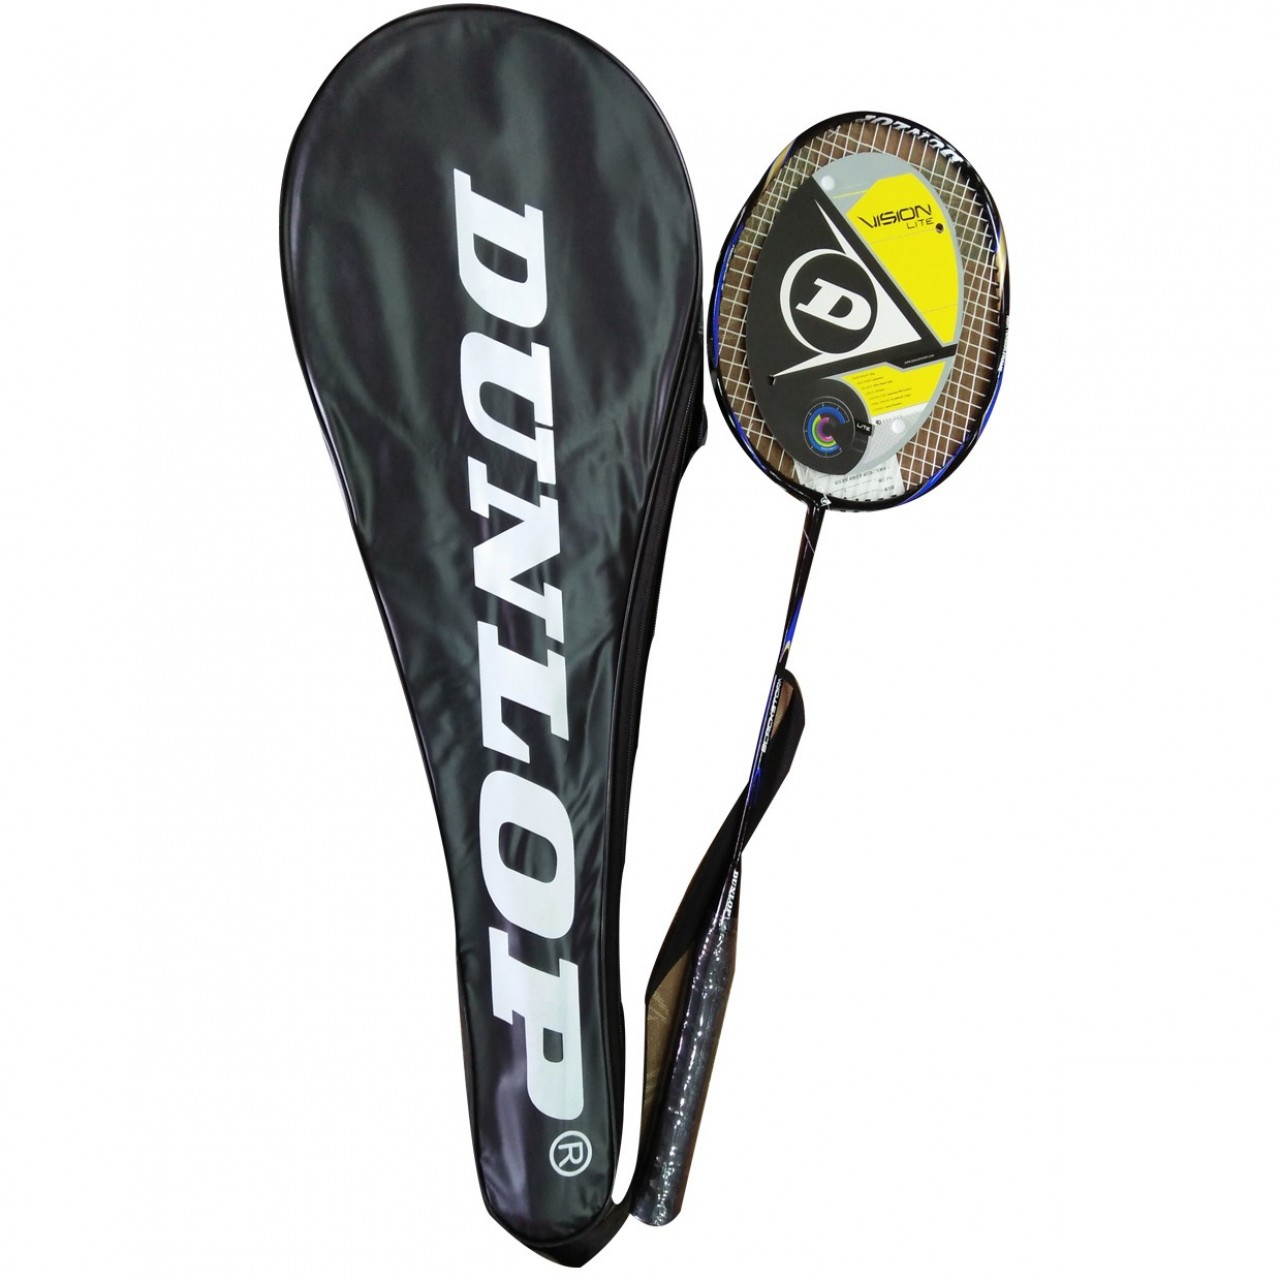 Single Badminton Racket By Dunlop